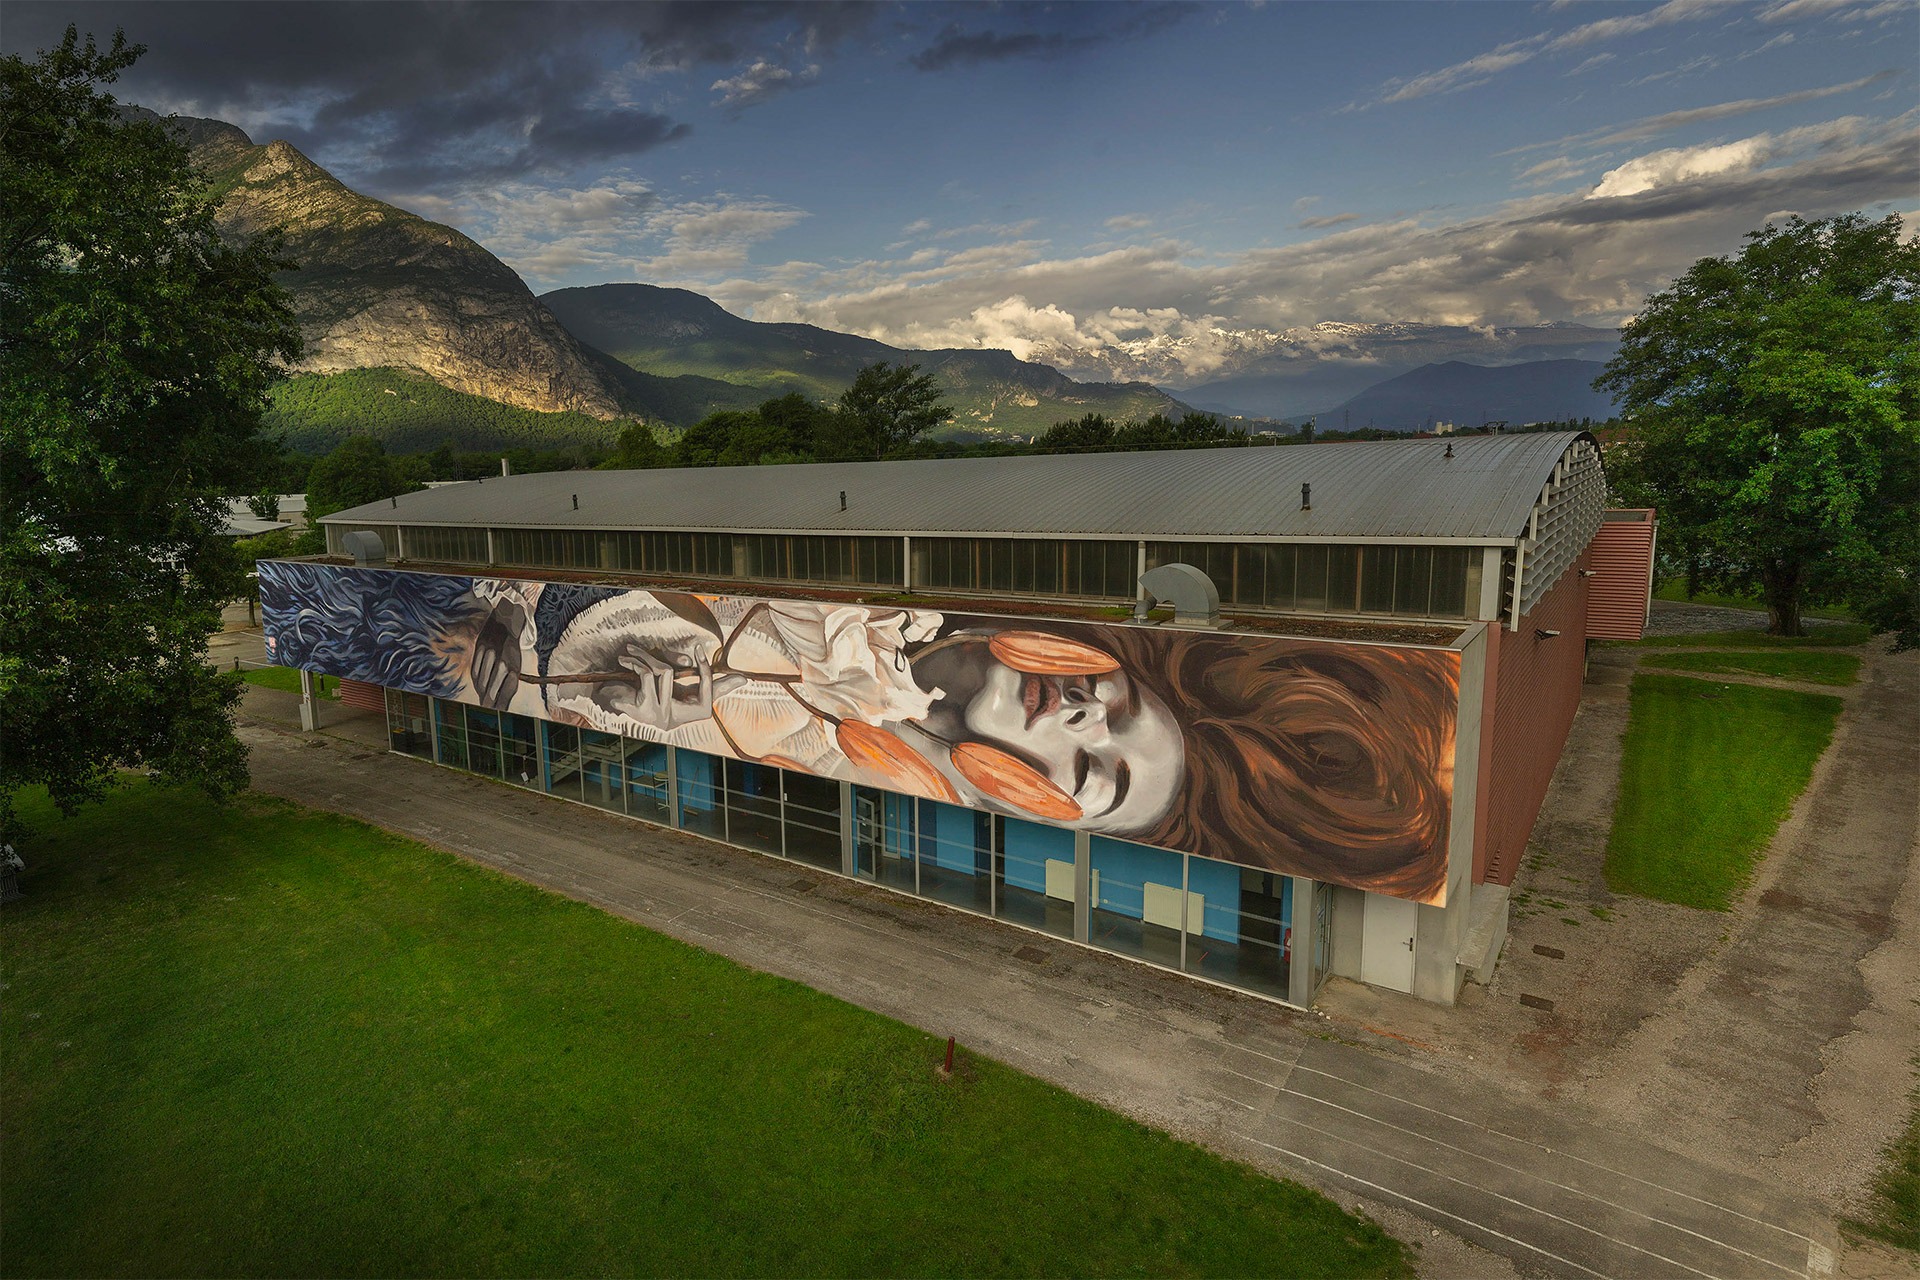 Luca Goce巨型街头壁画艺术